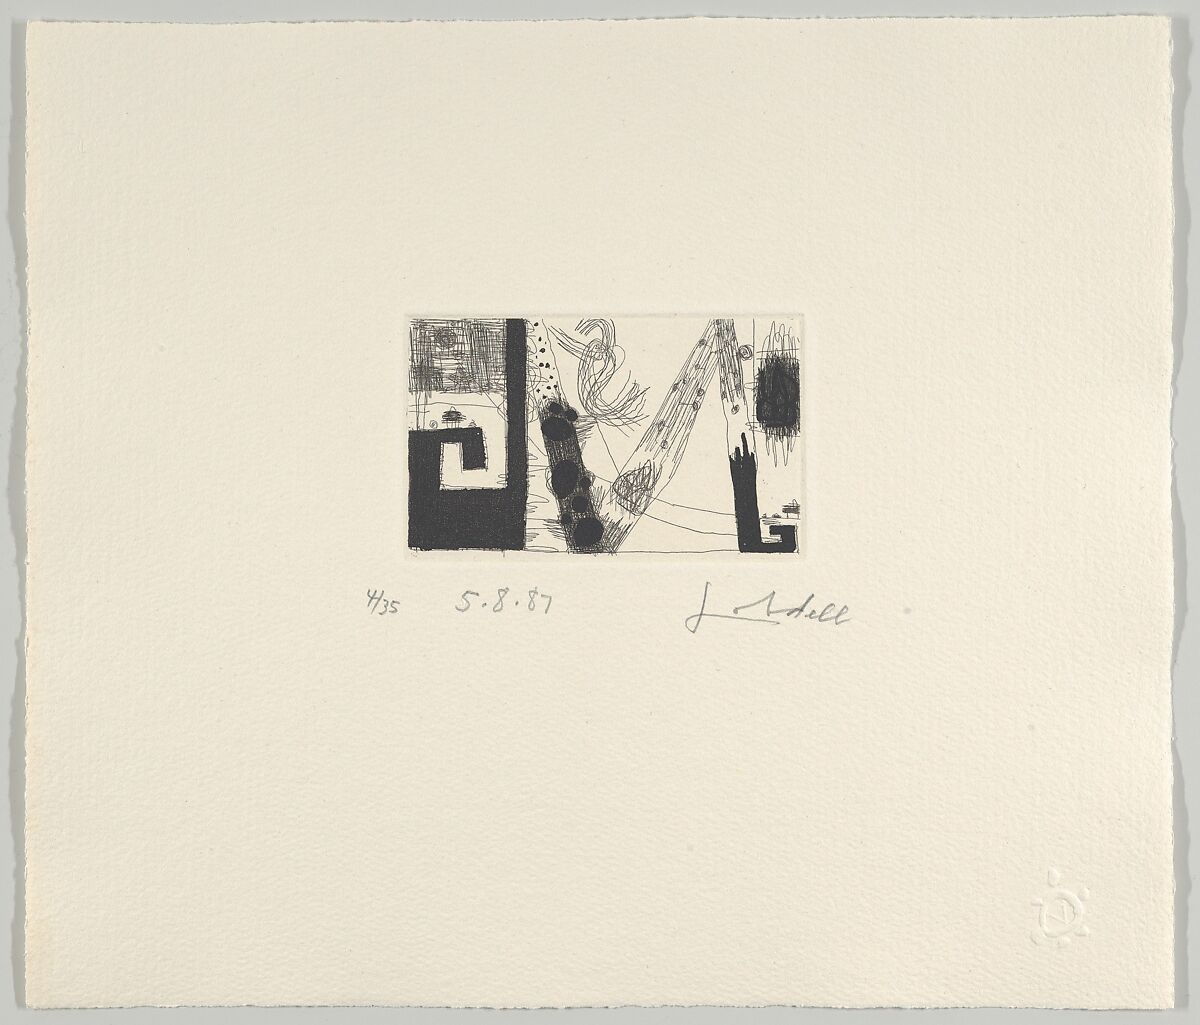 5.8.87, Frank Lobdell (American, Kansas City, Missouri 1921–2013 Palo Alto, California), Hardground etching with sugarlift aquatint; 4/35 